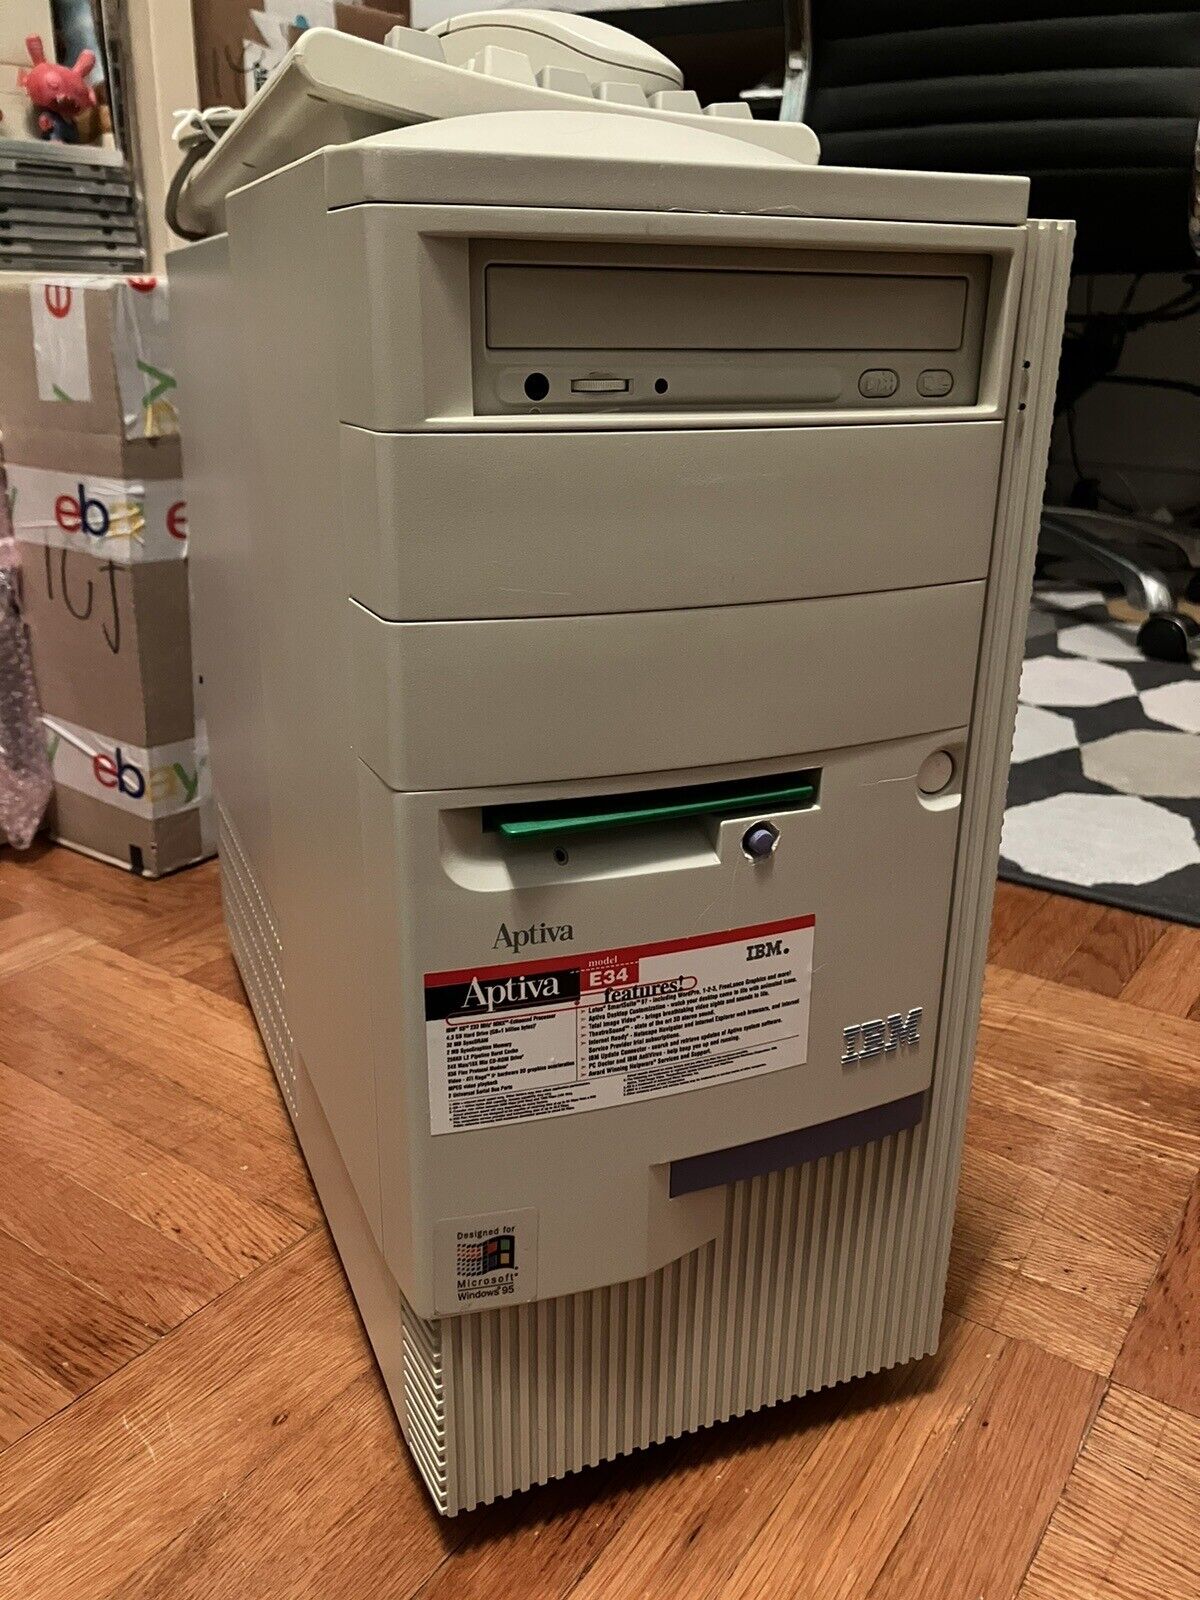 IBM Aptiva E34,AMD K6 233 MMX, 64MB RAM, 8GB HDD + Keyb&Mouse Vintage Retro PC